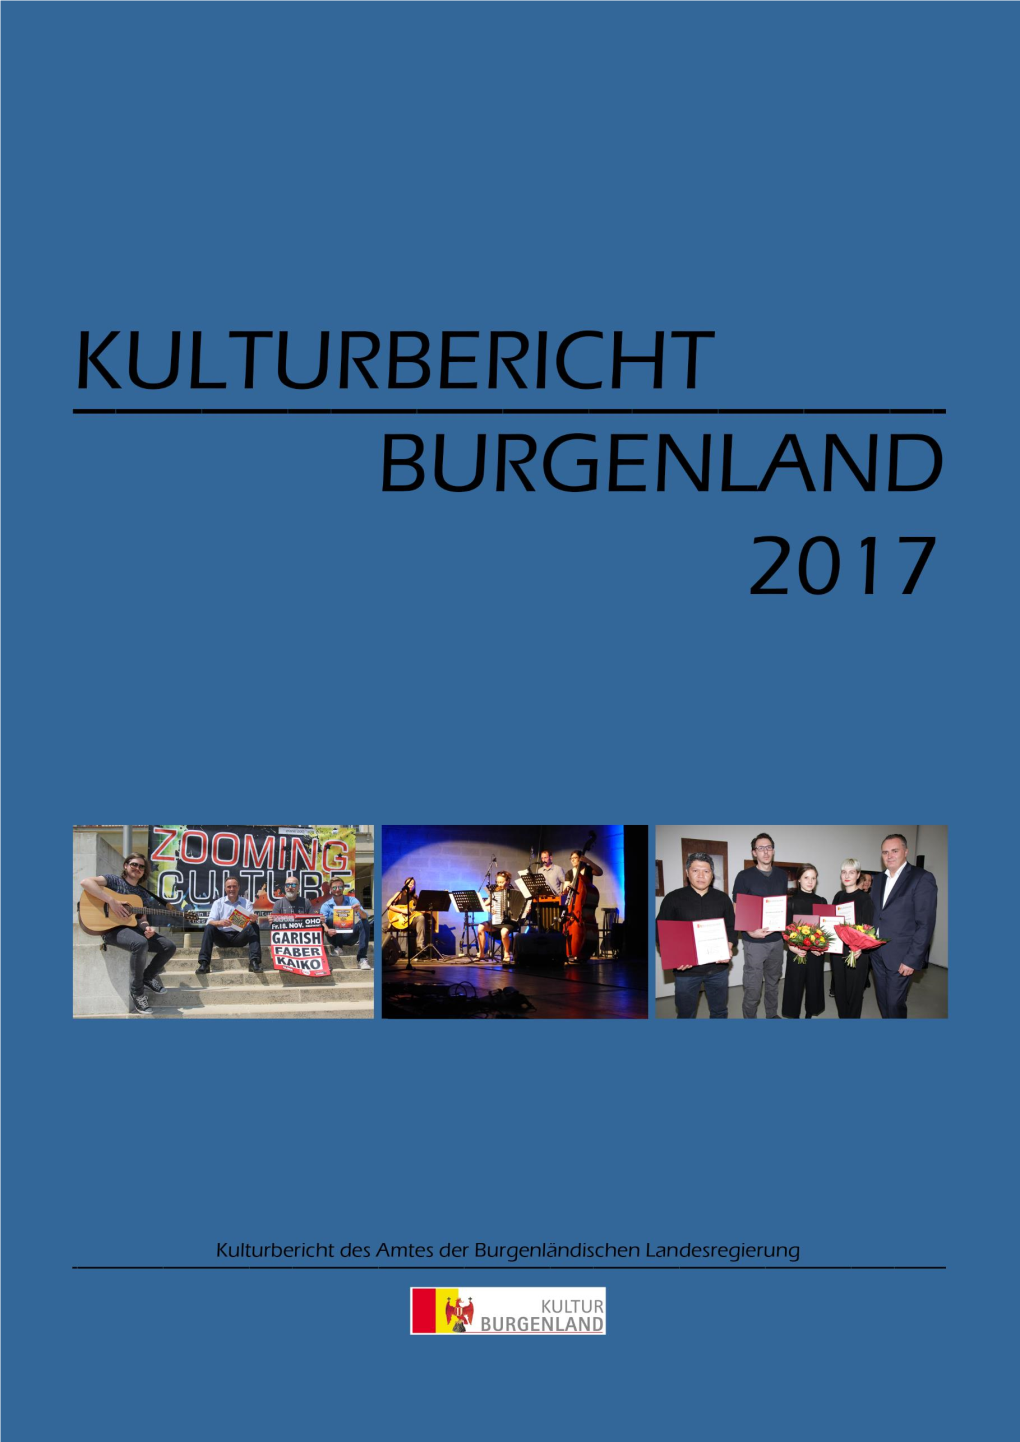 Kulturbericht 2017